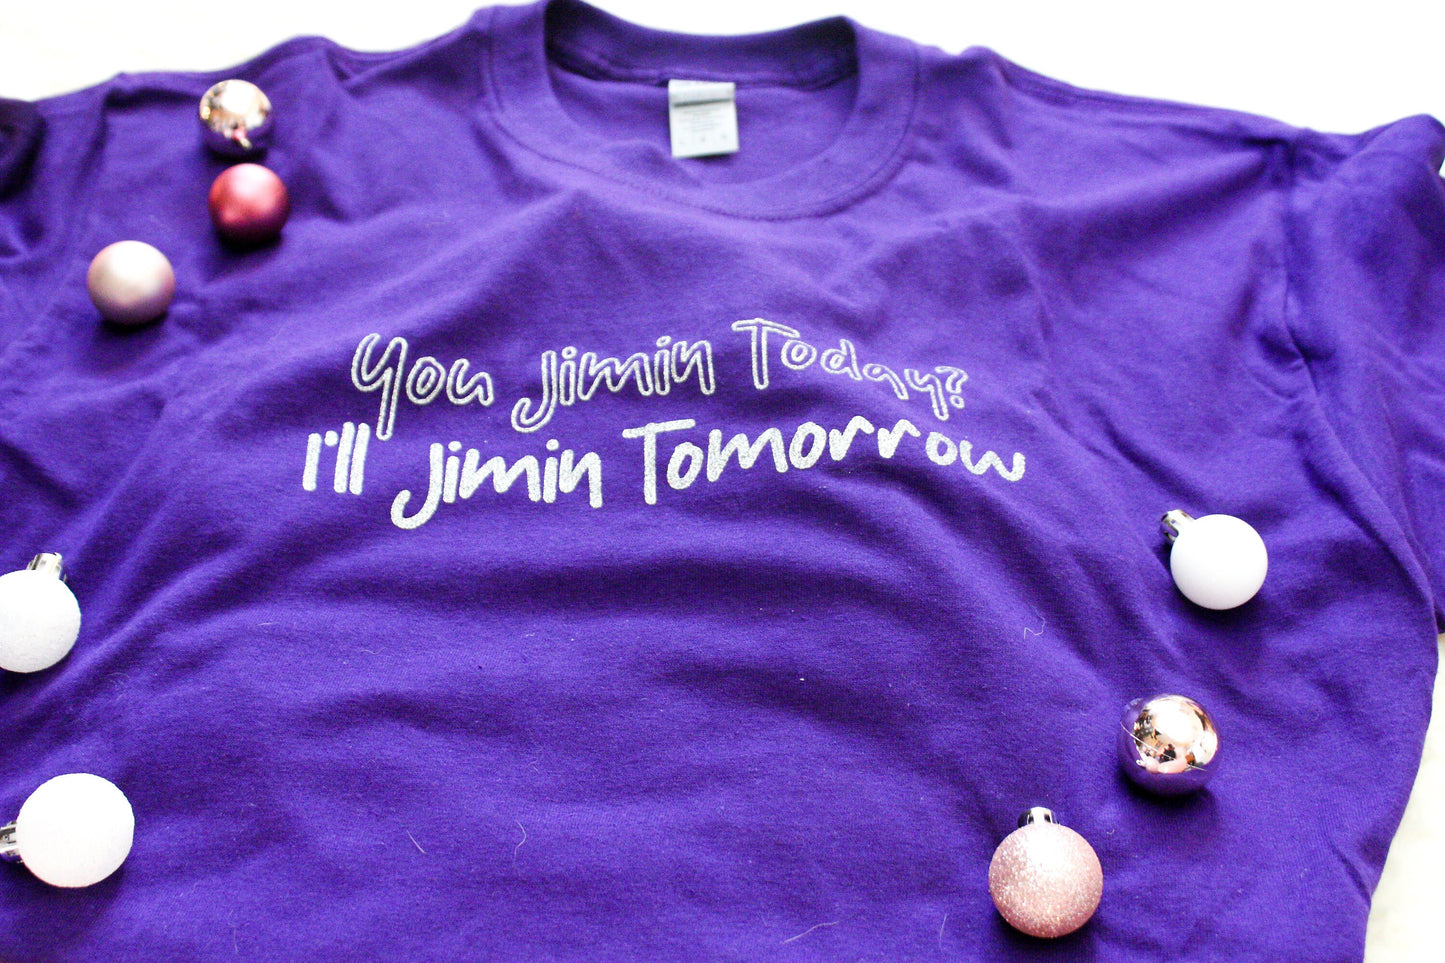 I'll Jimin Tomorrow